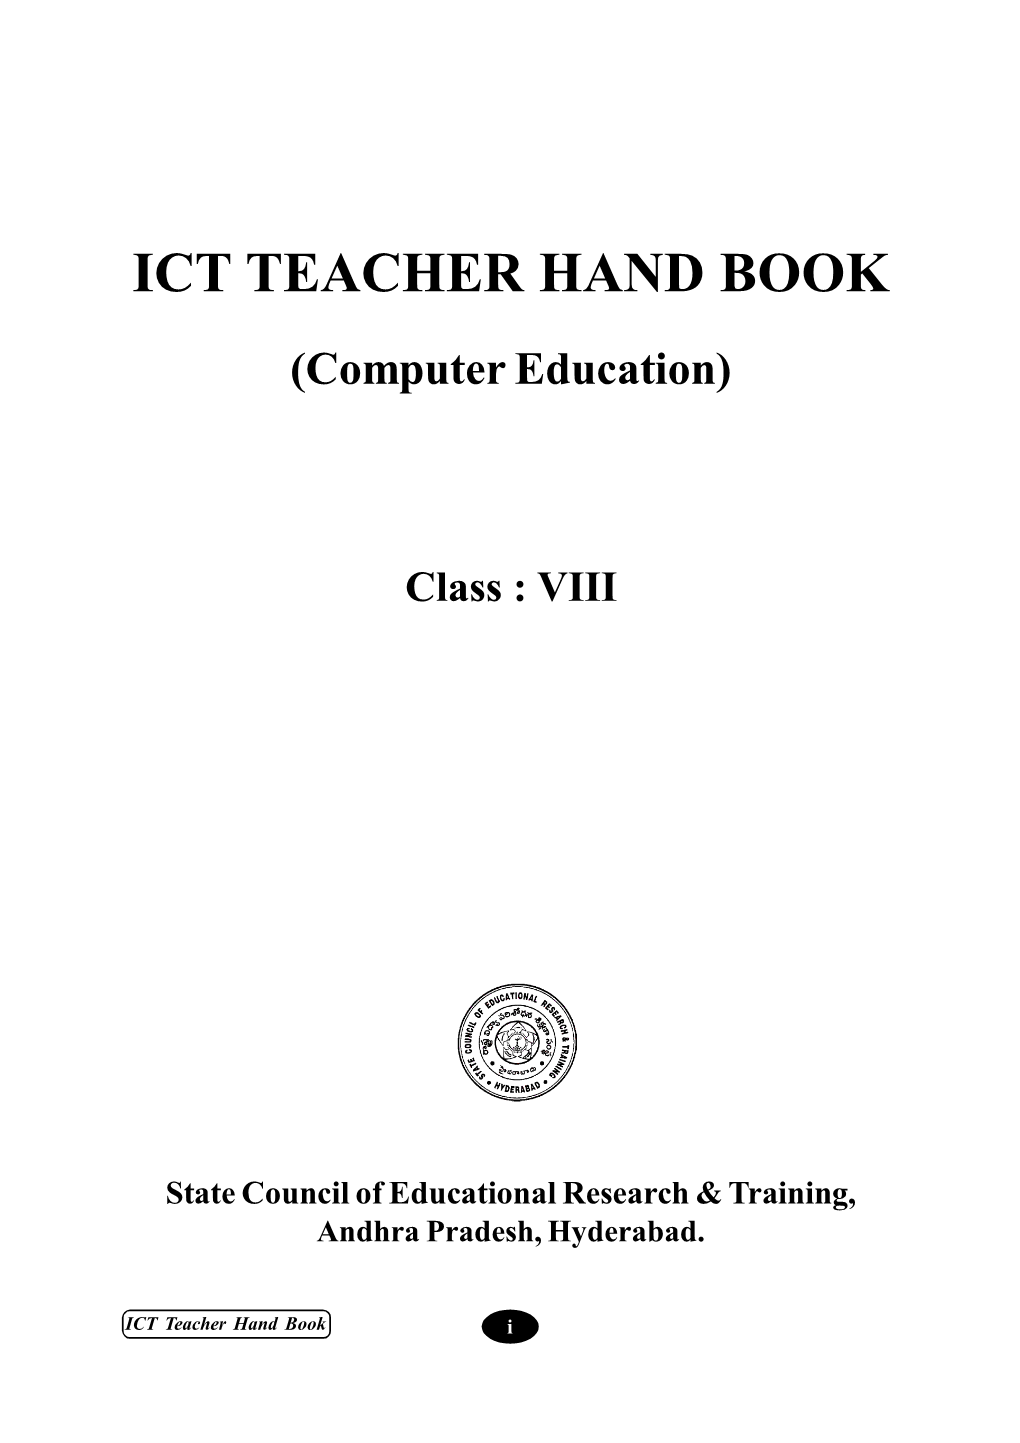 ICT TEACHER HAND BOOK (Computer Education)